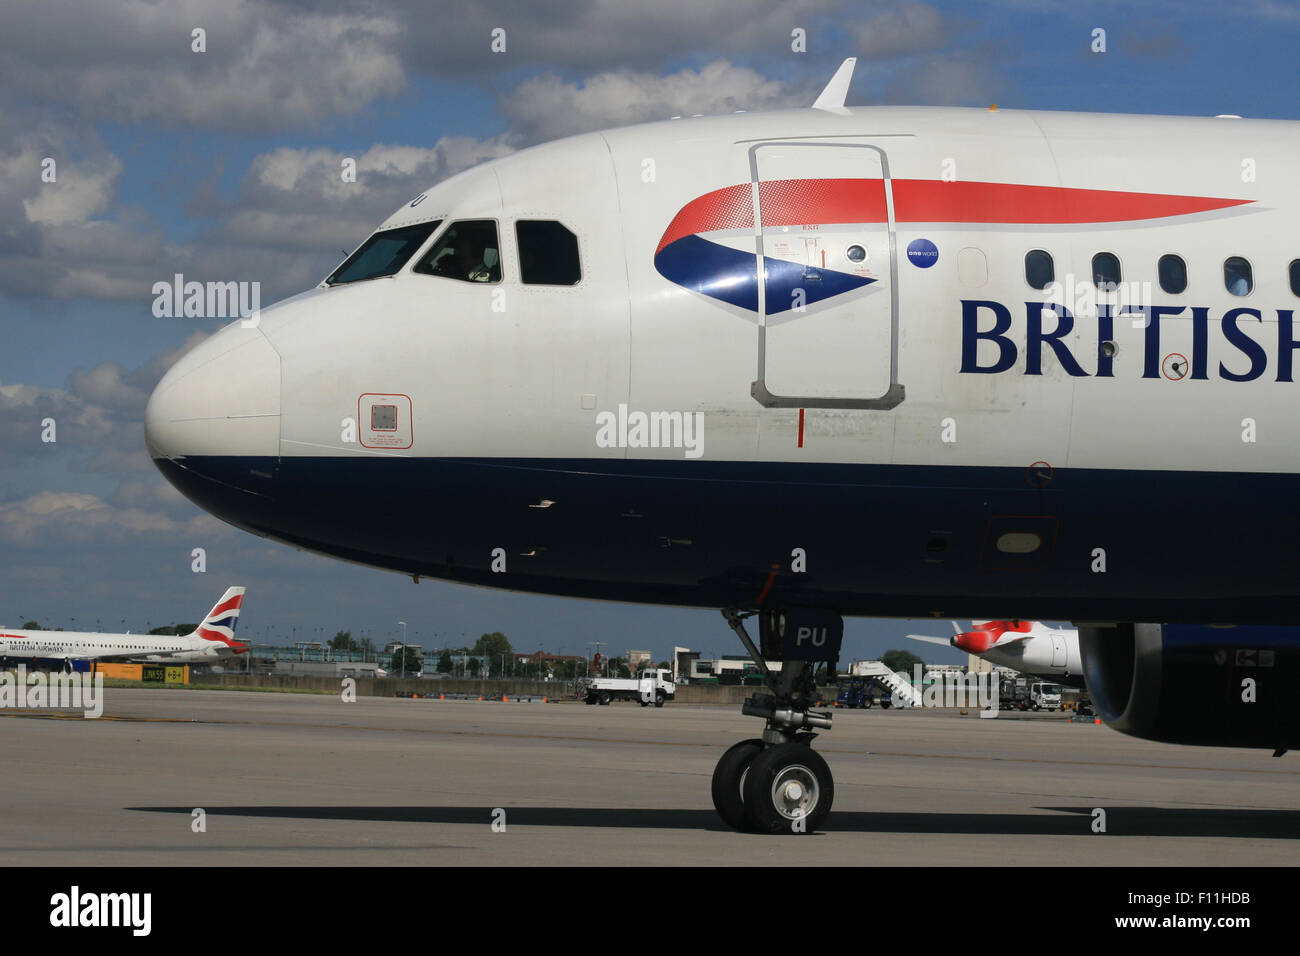 BA BRITISH AIRWAYS INTERNATIONAL AIRLINES GROUP Stock Photo